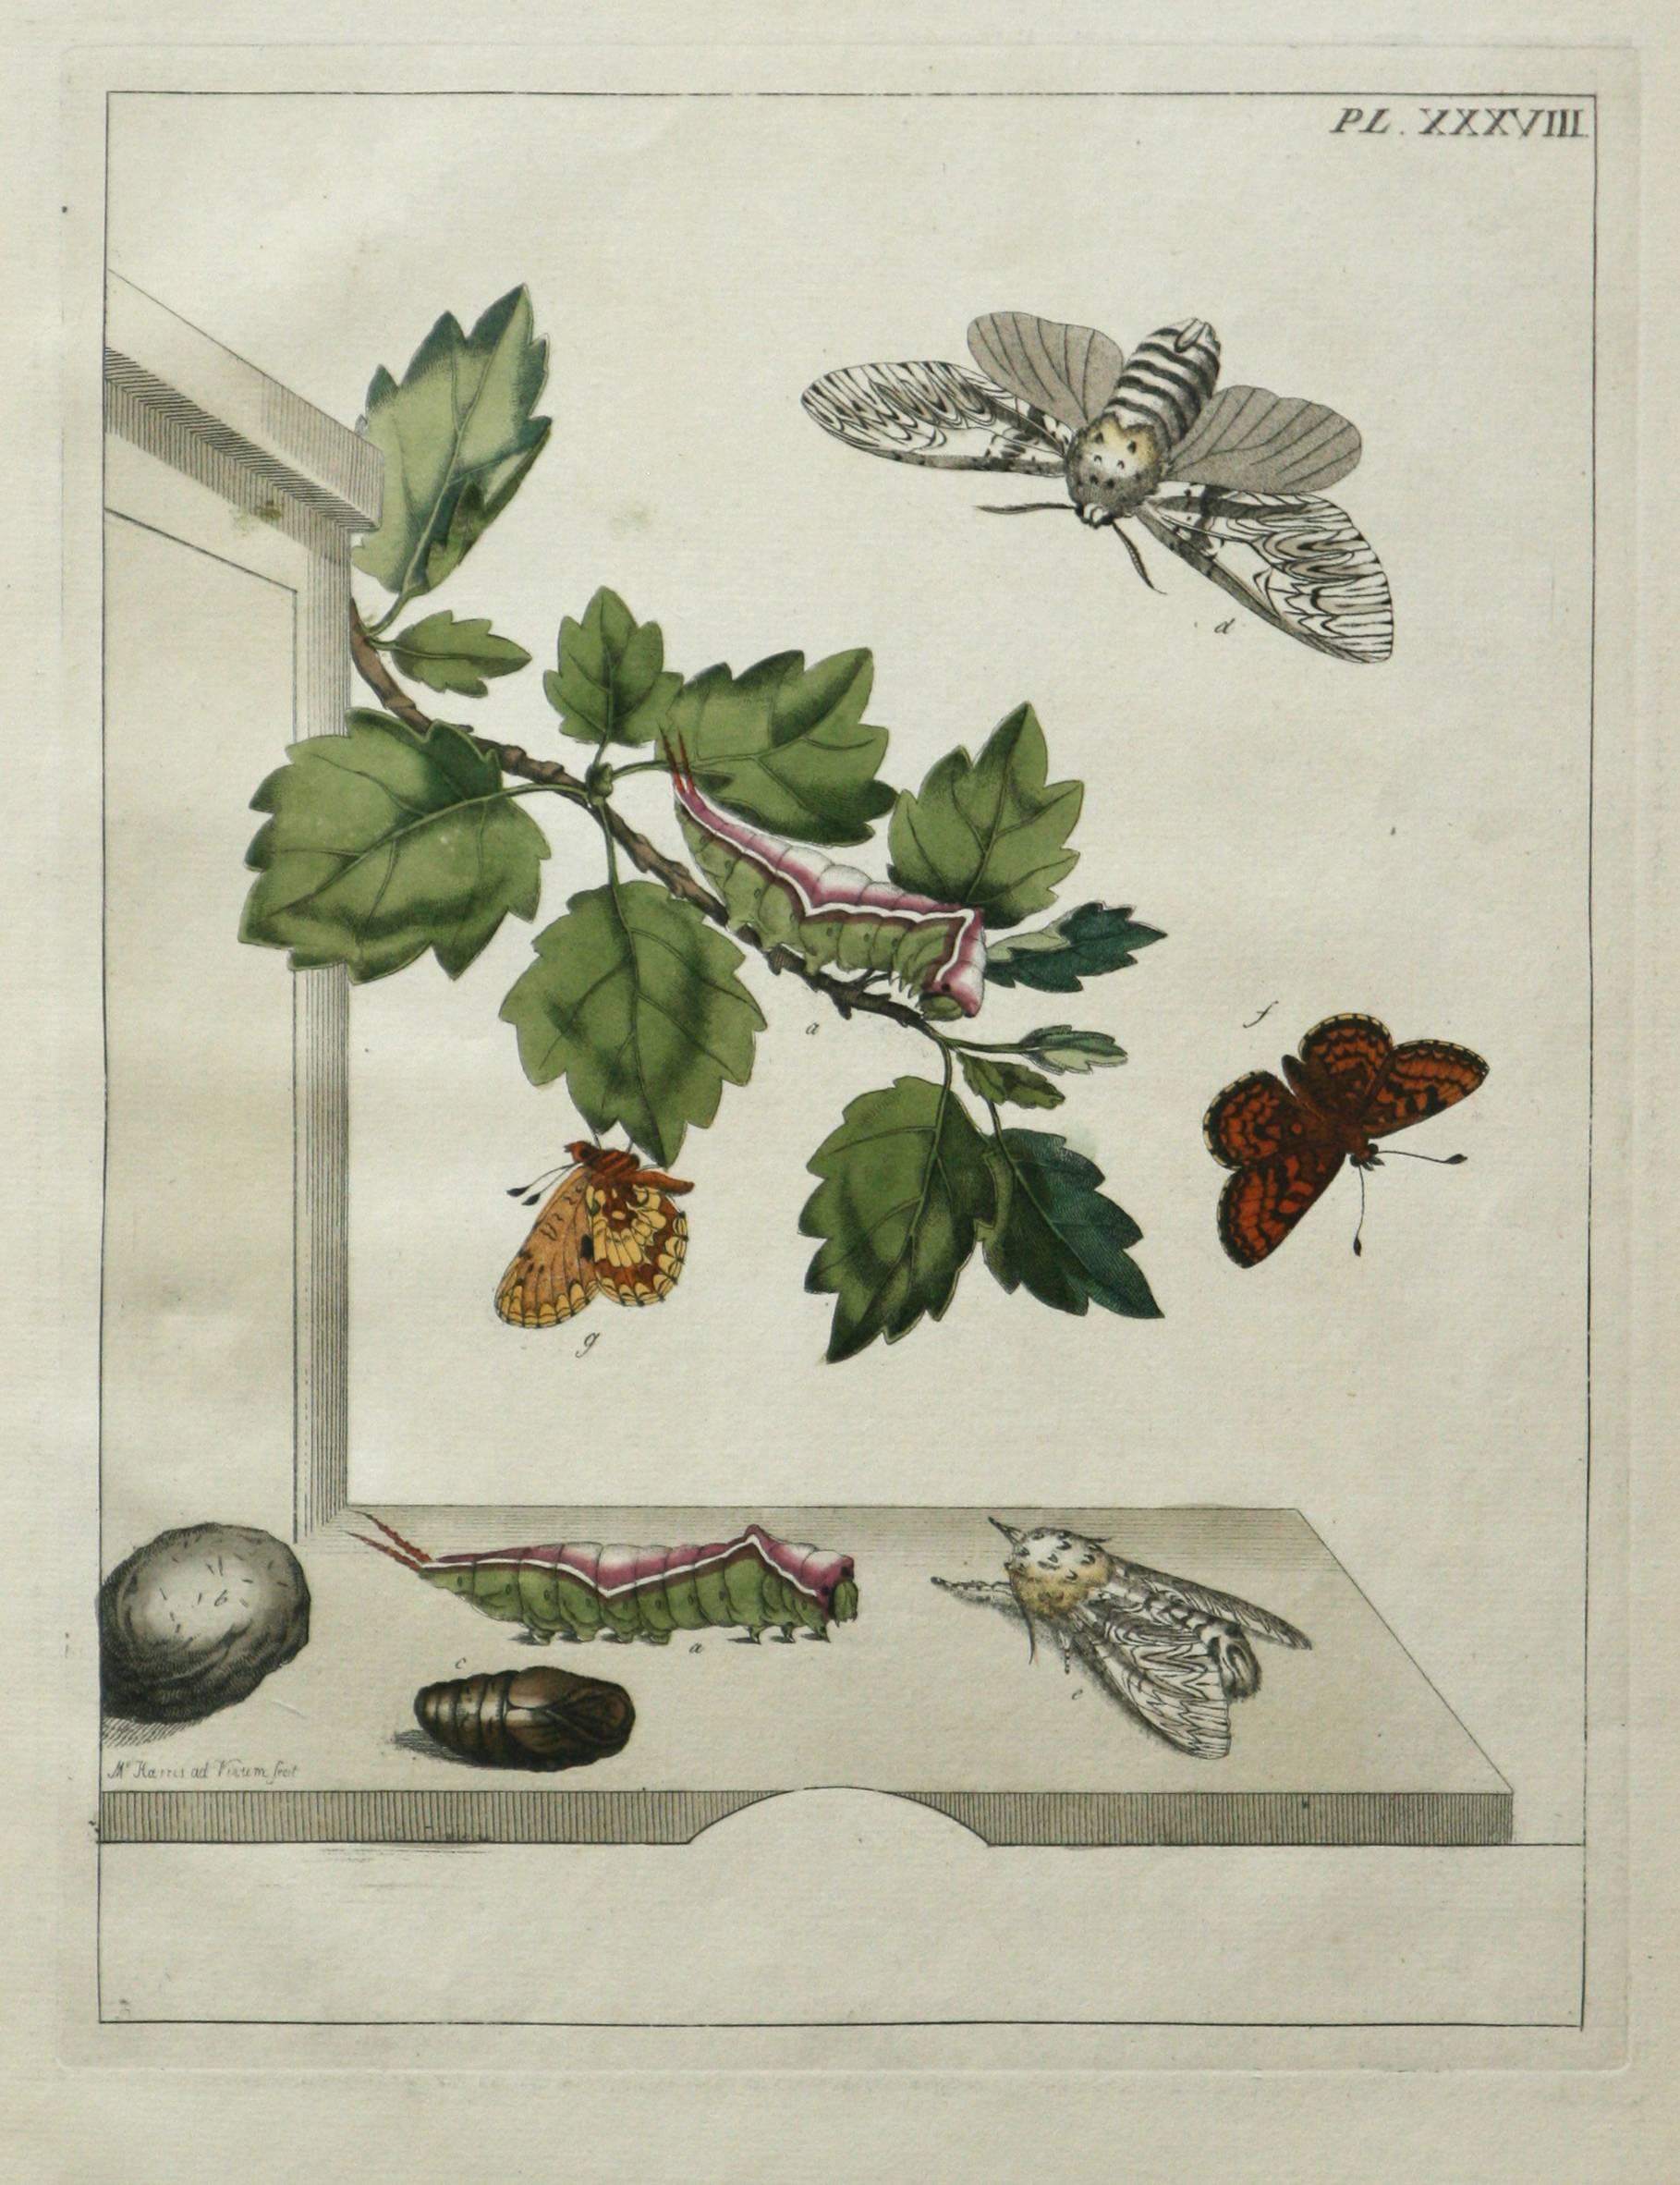 Moses Harris Print - The Aurelian, A Natural History of English Moths  Butterflies  Plate XXXVIII